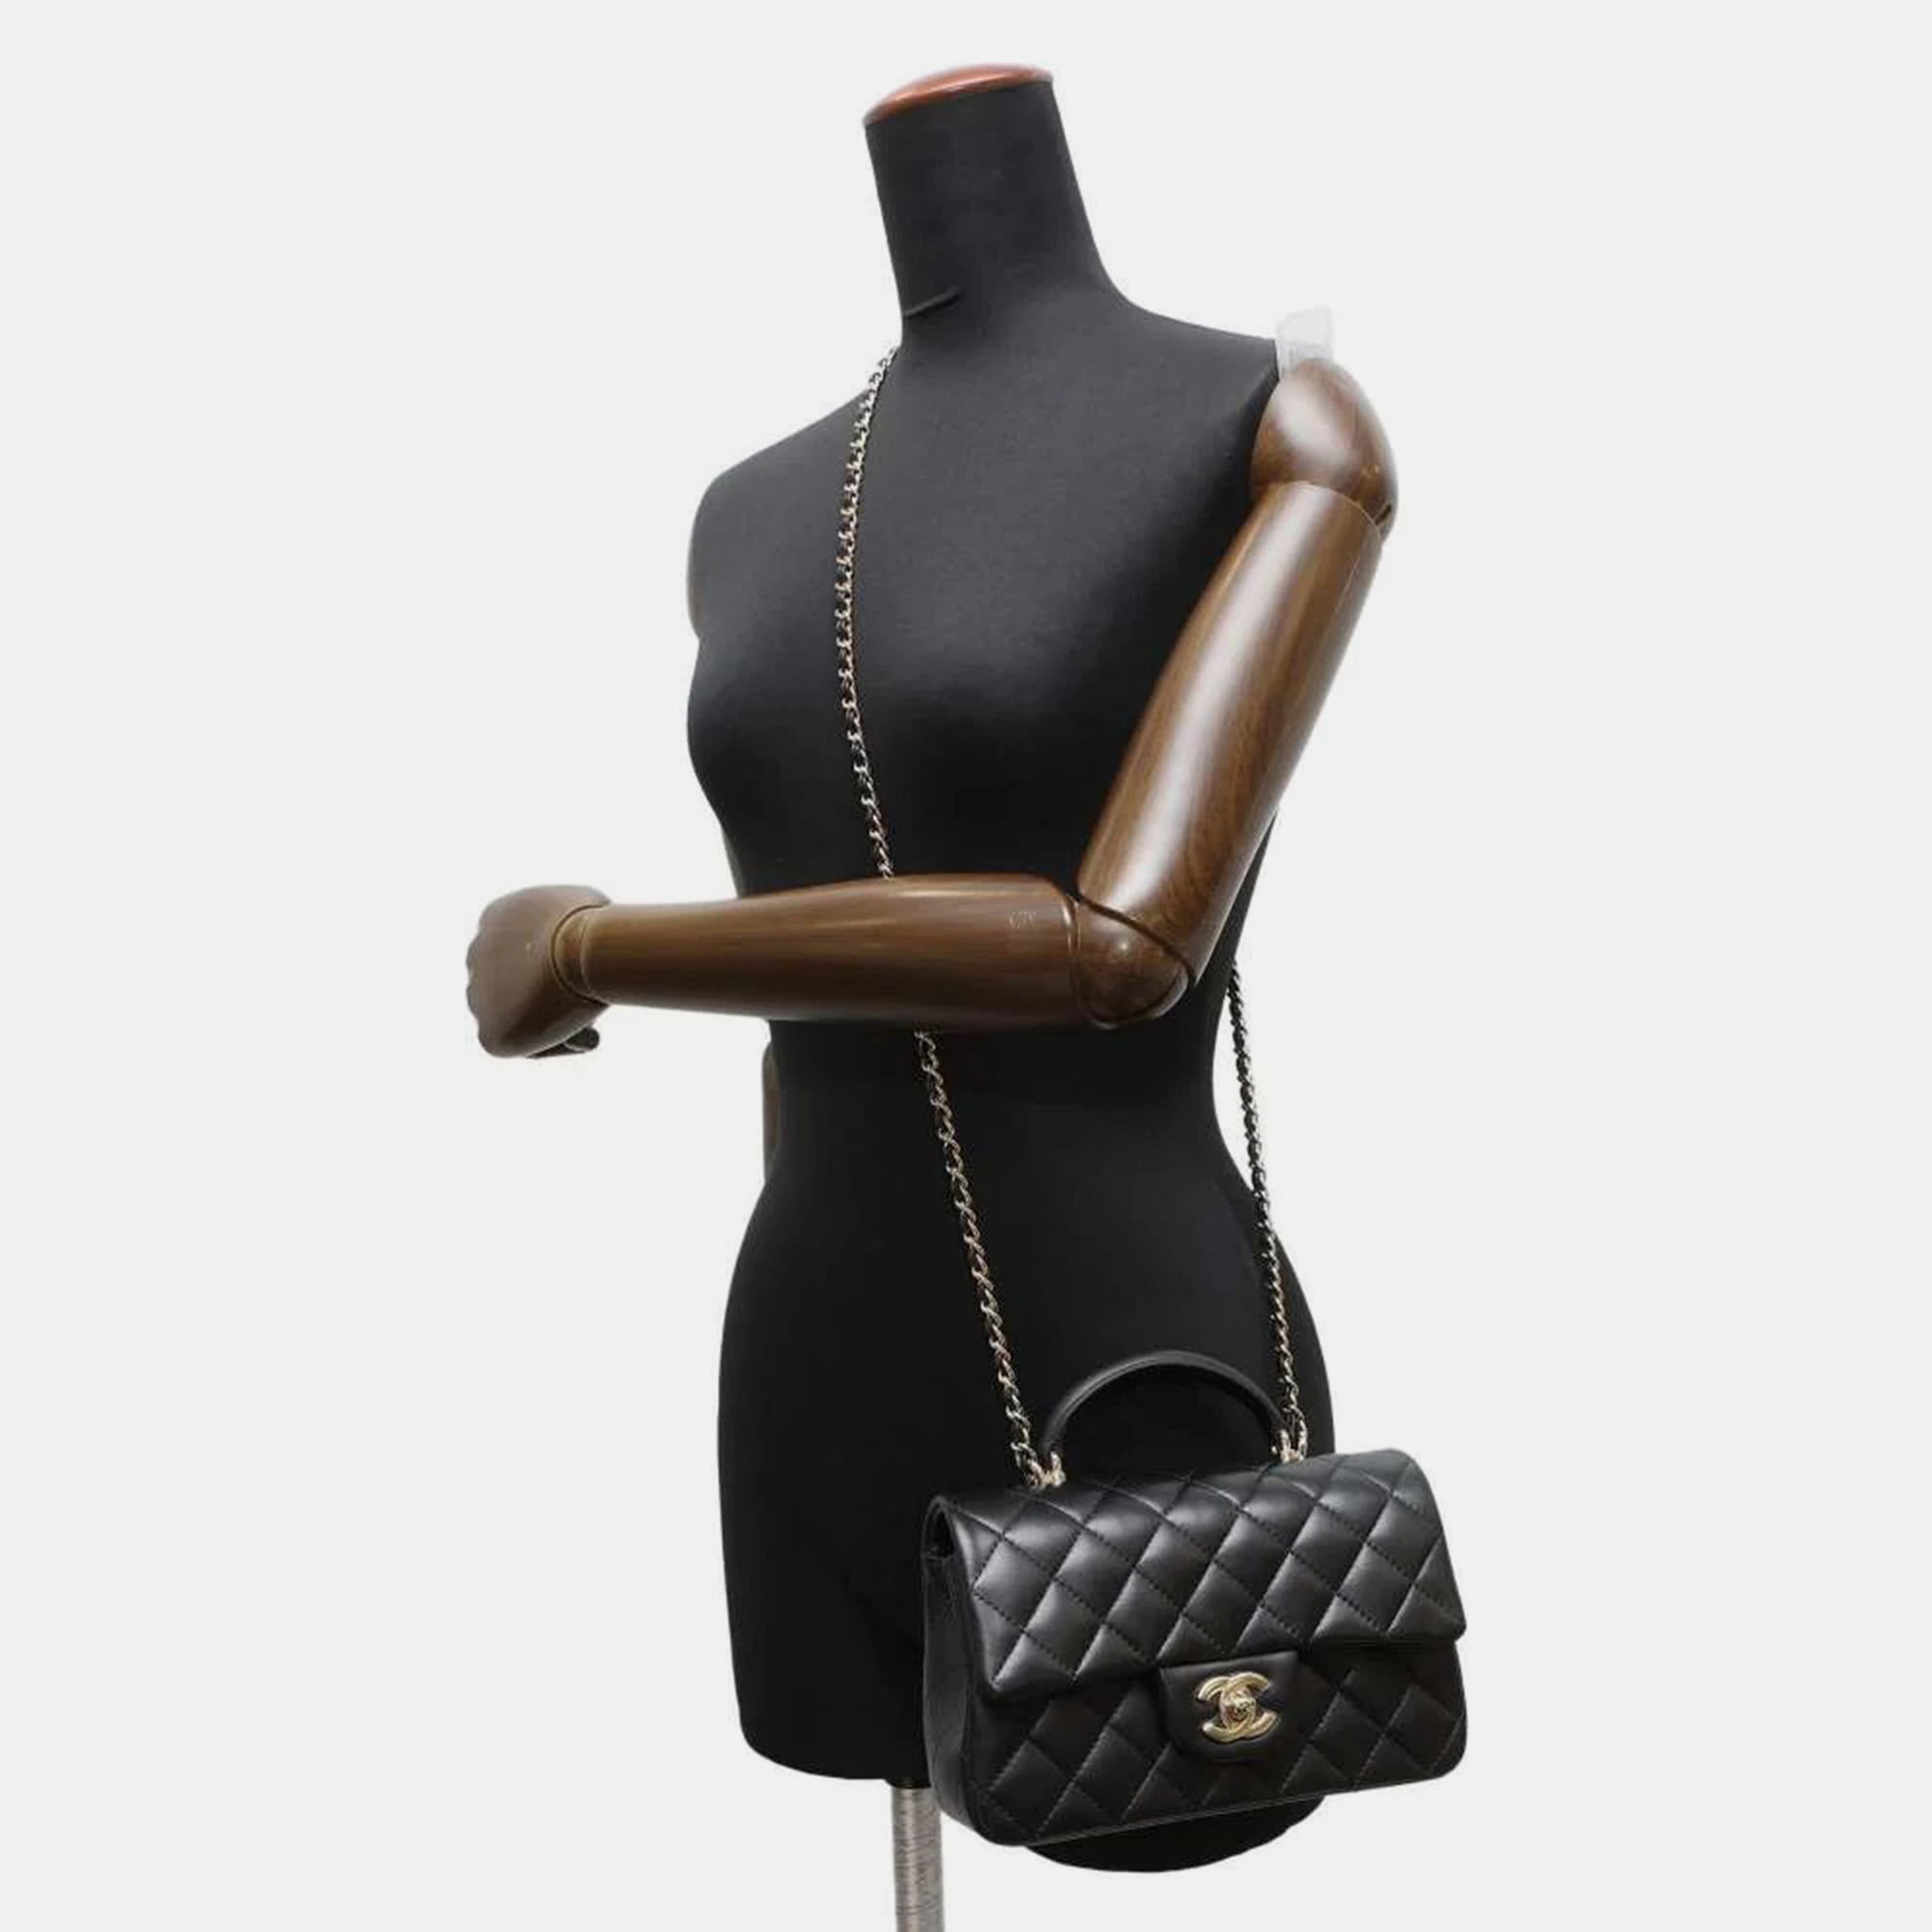 Chanel Black Leather Rectangular Mini Top Handle Flap Bag